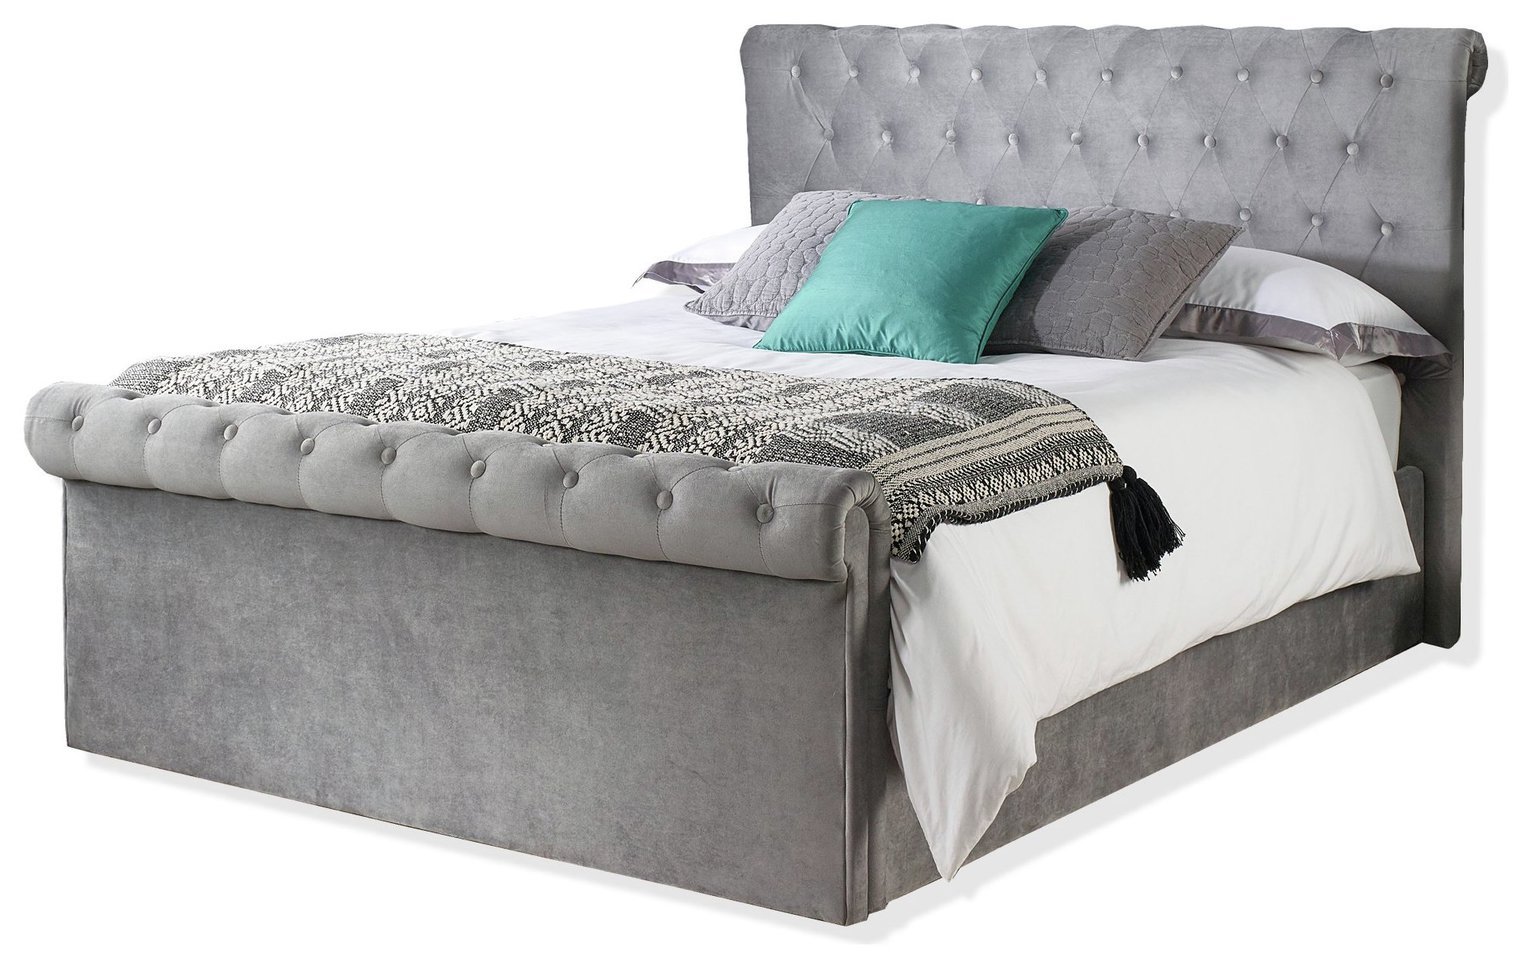 Aspire Chesterfield Kingsize Ottoman Bed Frame - Grey